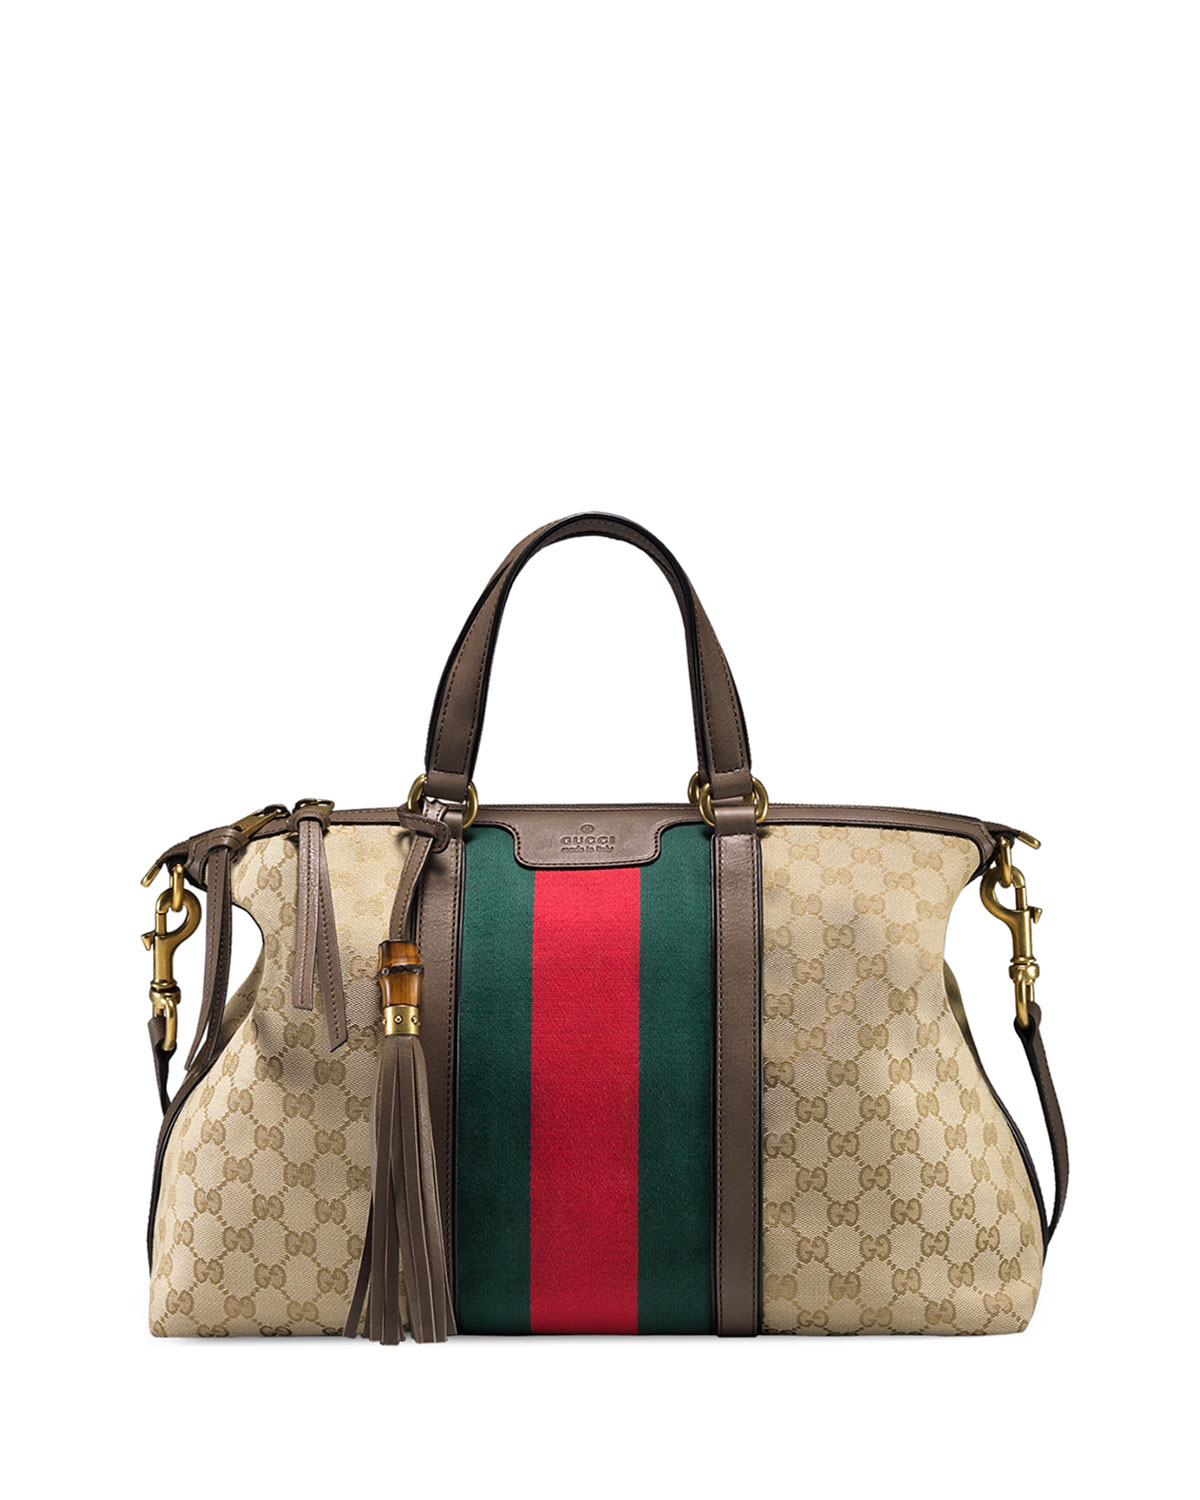 Gucci Rania Original Gg Canvas Tote Bag in Brown - Lyst